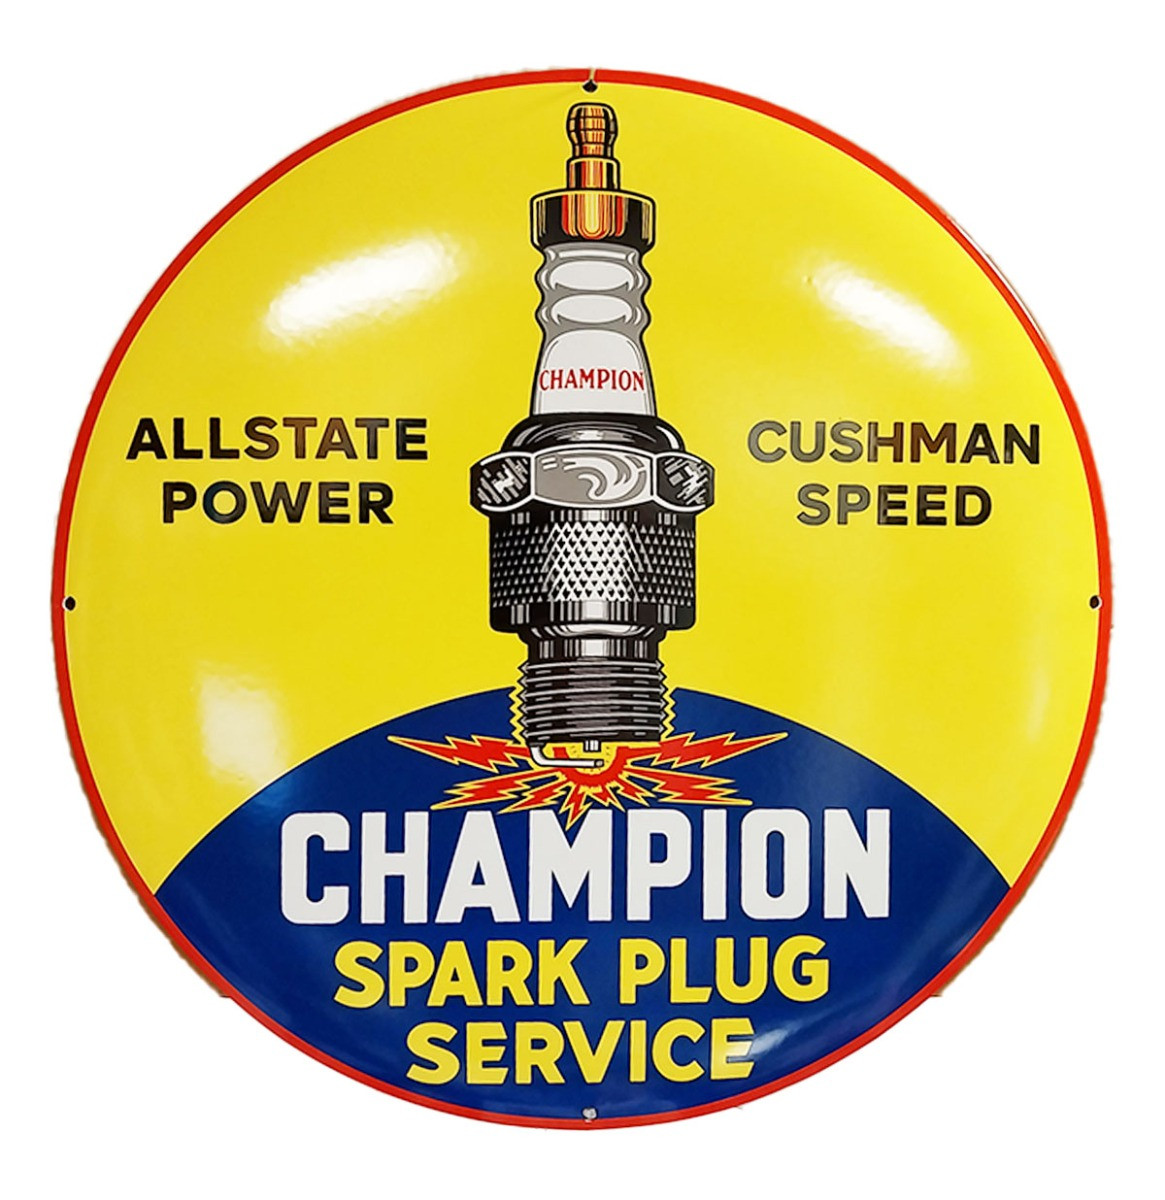 Champion Spark Plug Service Emaille Bord - Ø50cm